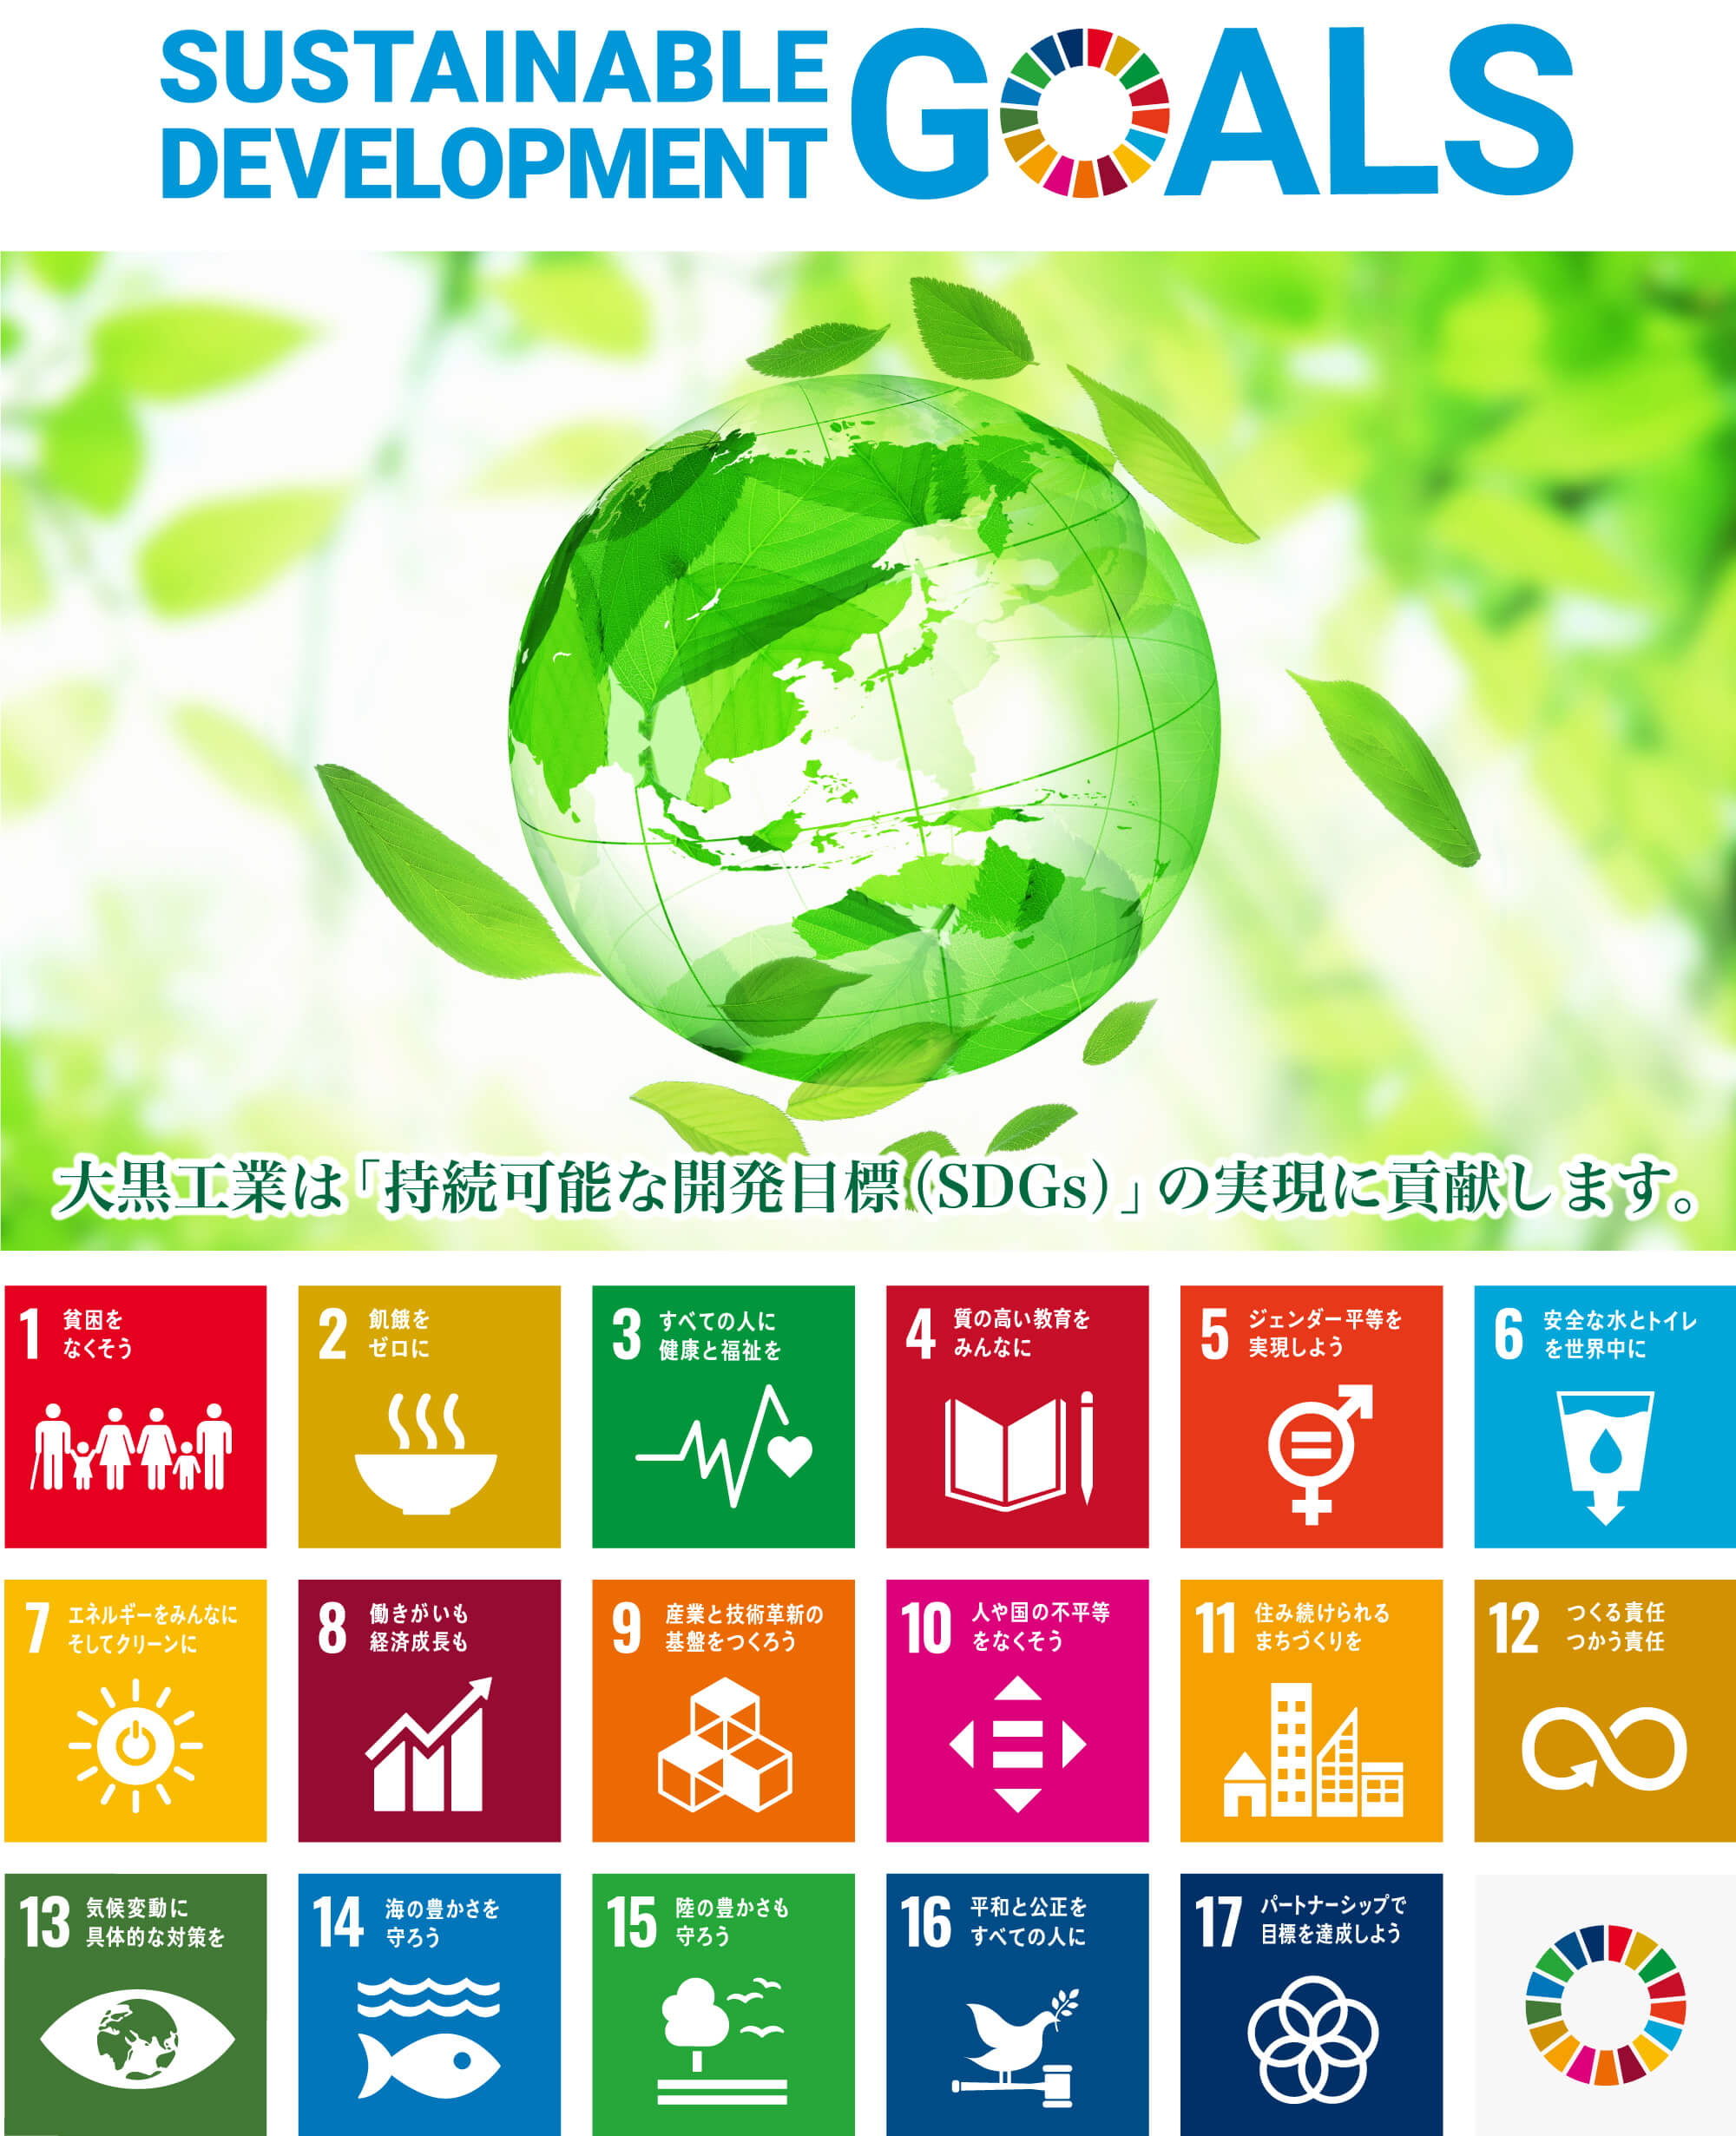 Sustanable Development Goals 大黒工業は「持続可能な開発目標（SDGs）」の実現に貢献します。